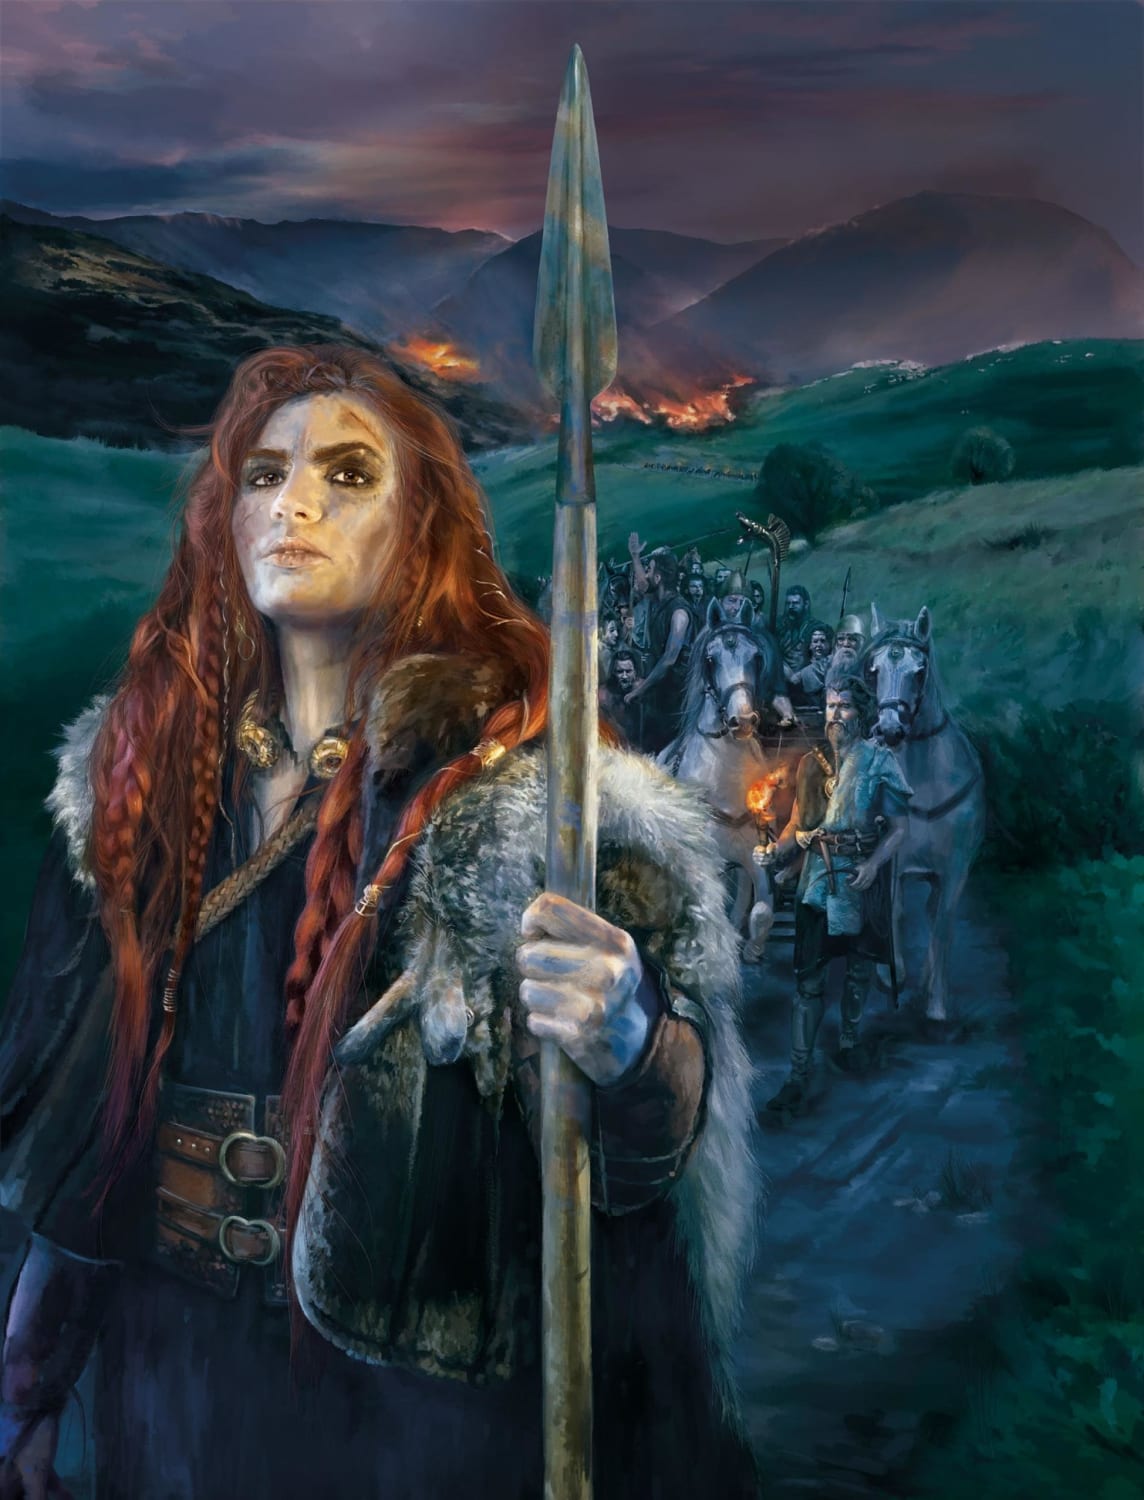 Boudica's rebellion against the Roman Empire